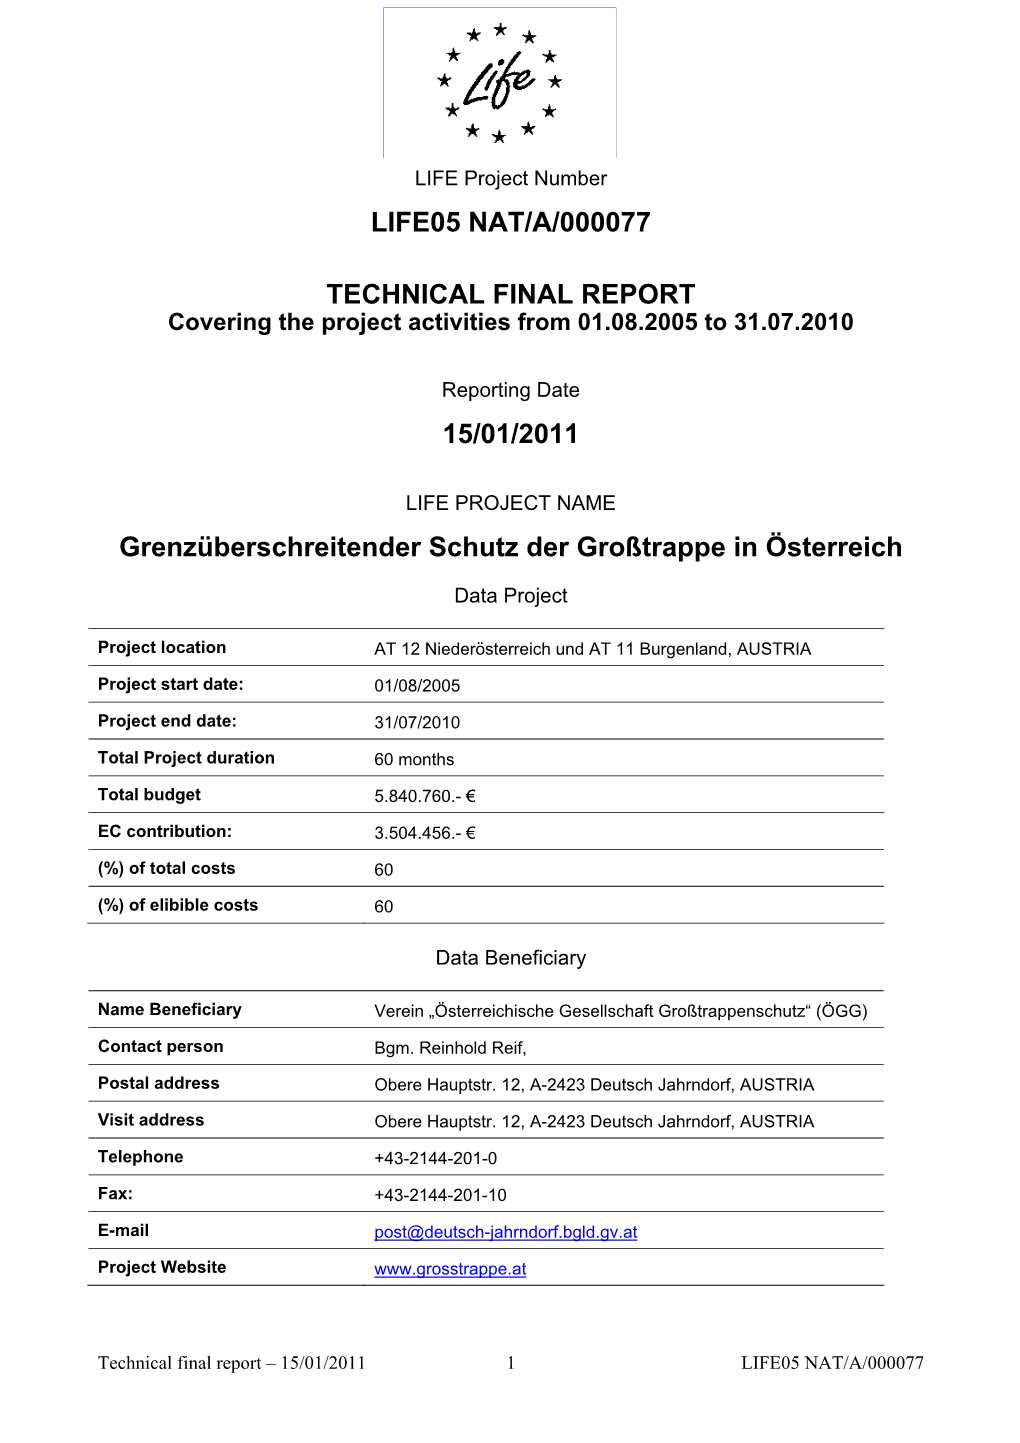 Life05 Nat/A/000077 Technical Final Report 15/01/2011